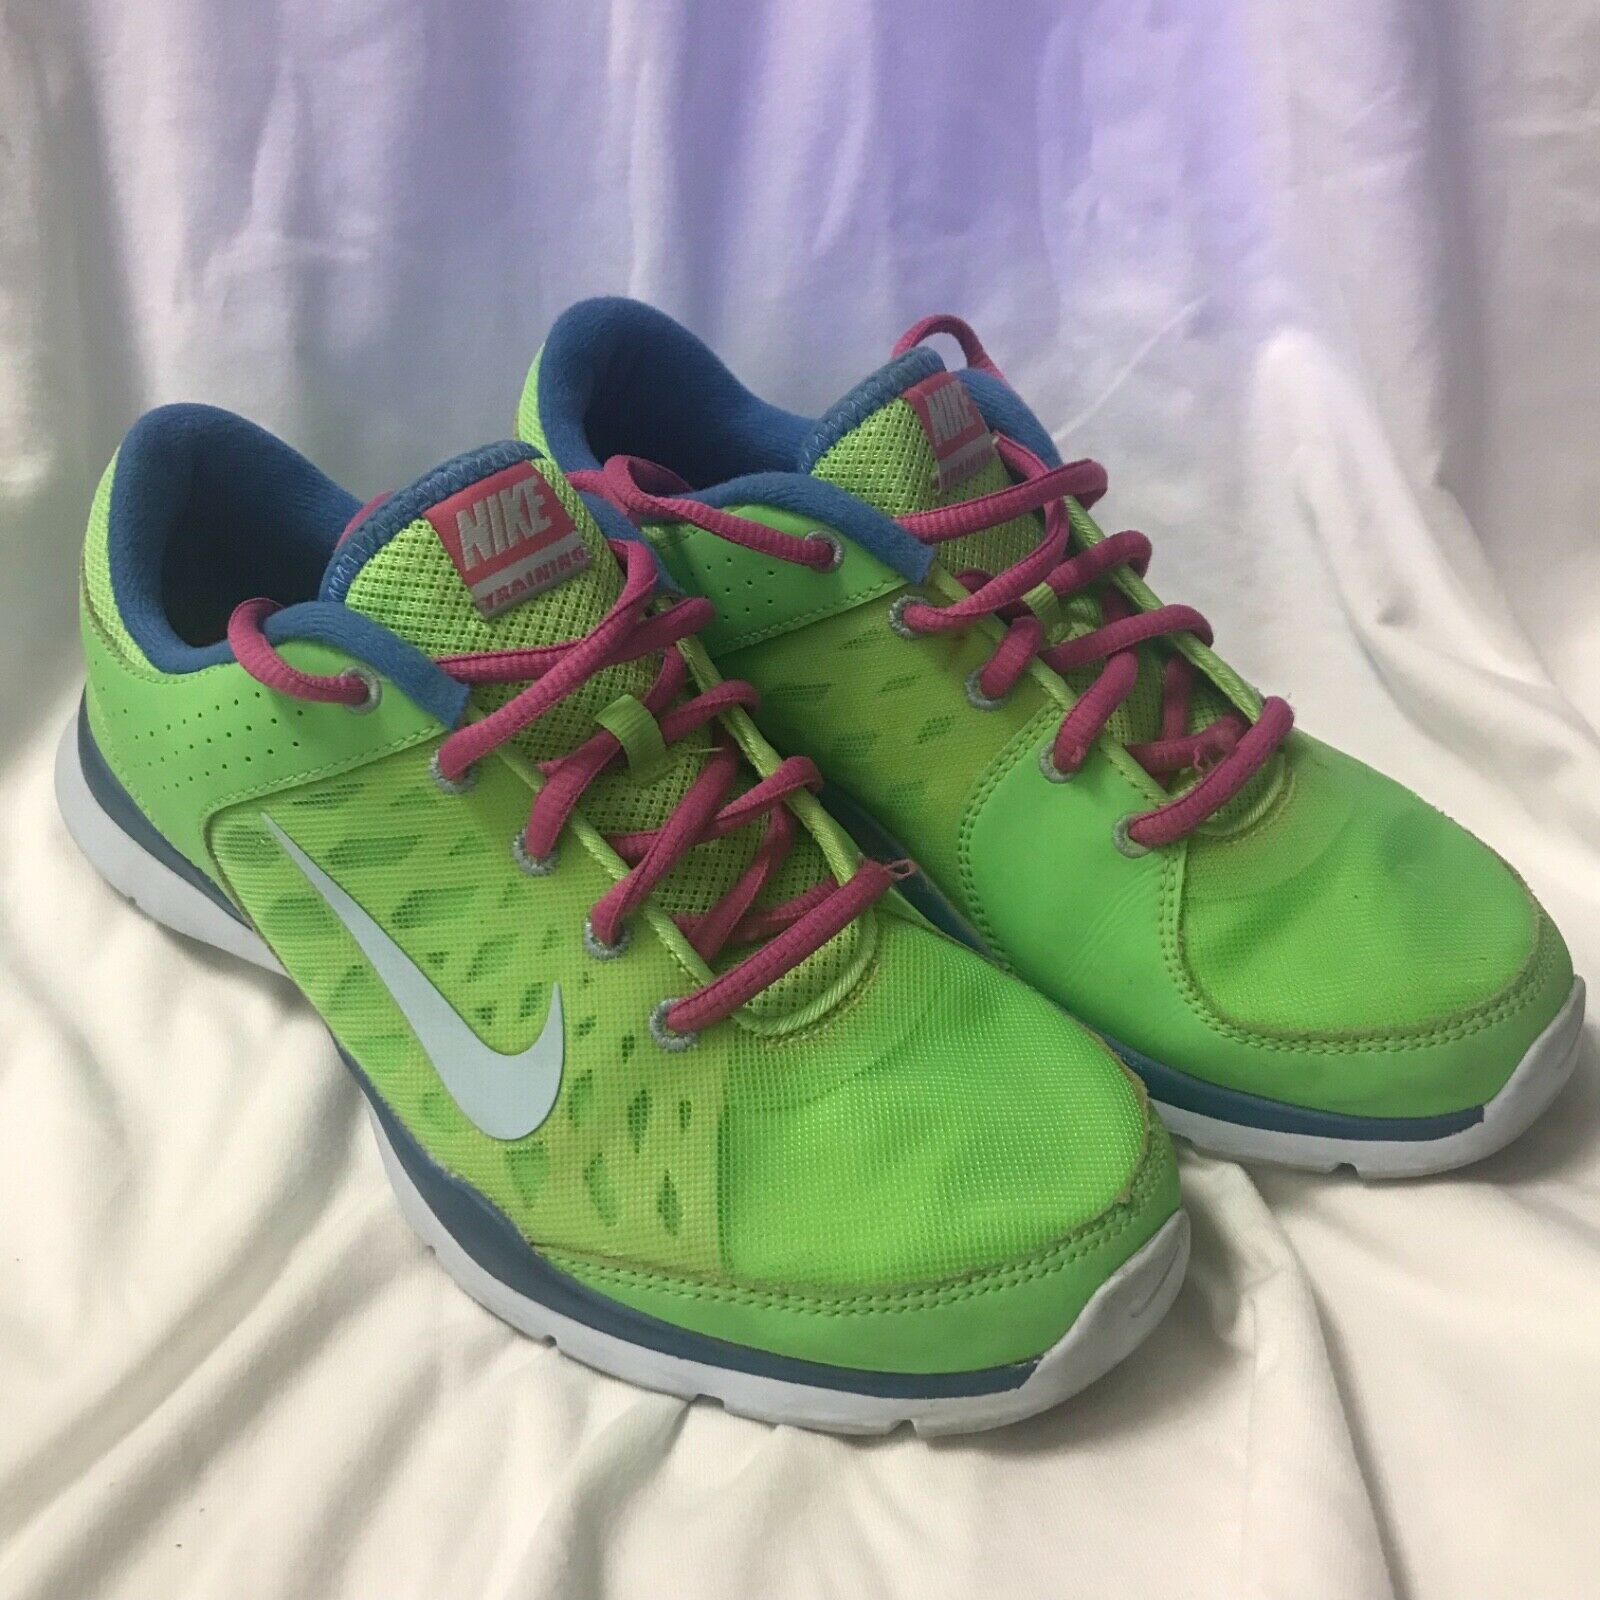 Womens Nike Flex Trainer 3 Size 8.5 Green Purple Running Walking Shoes Sneakers